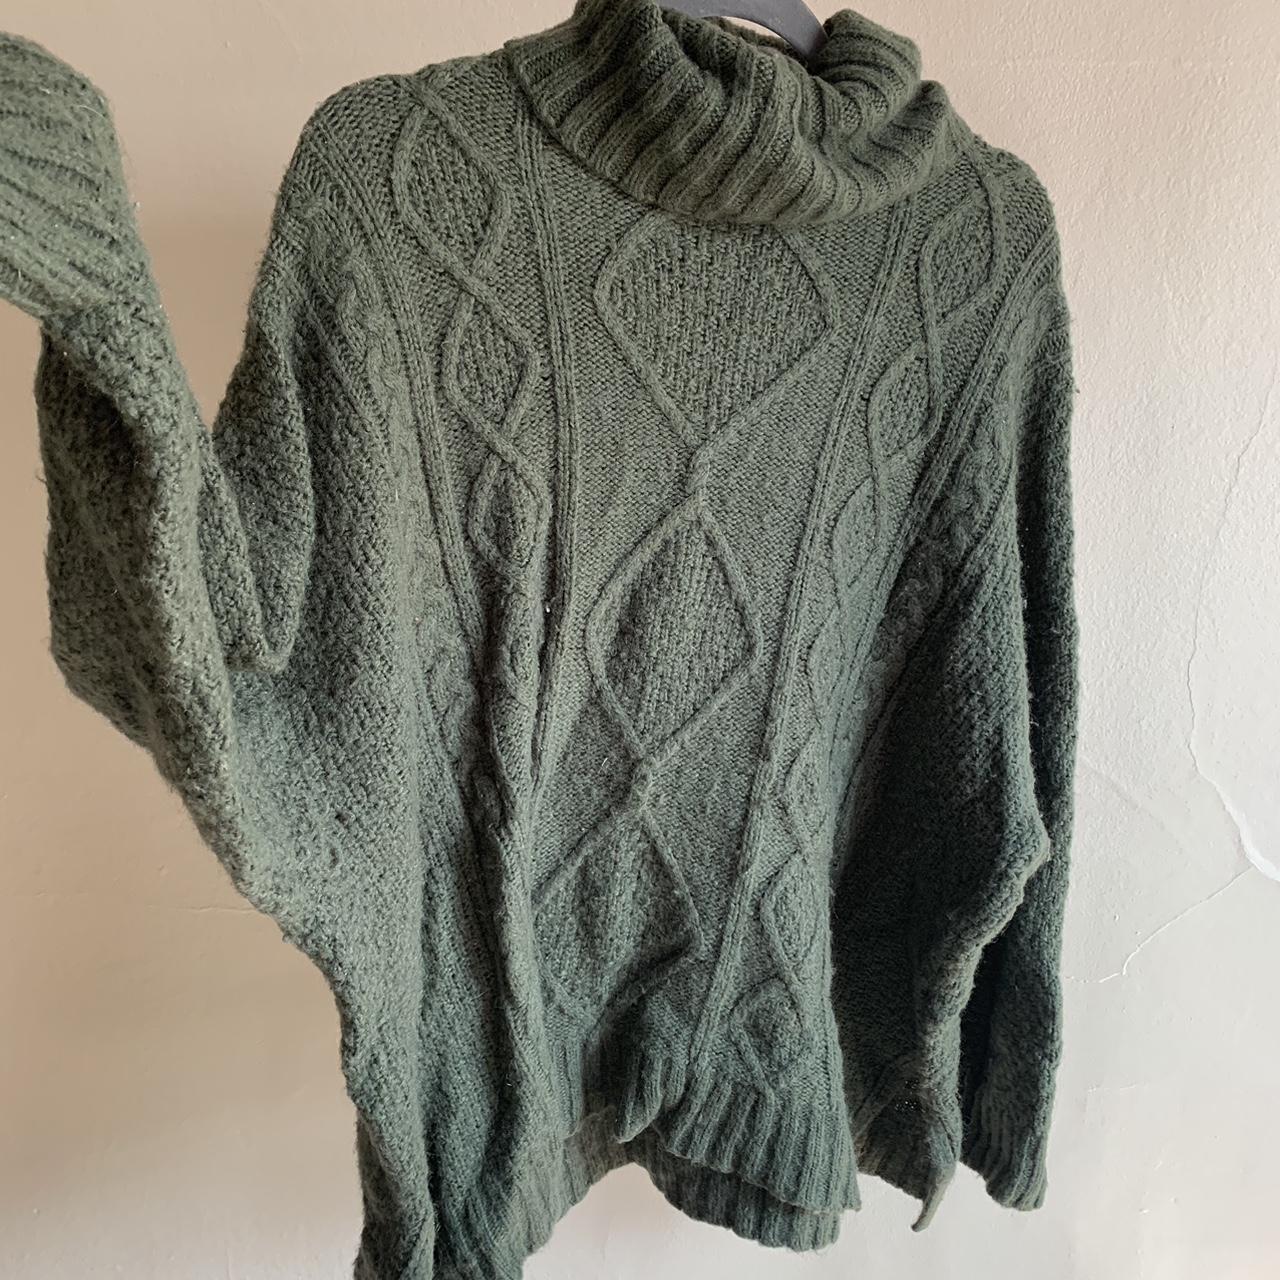 Green Arie knit sweater - Depop